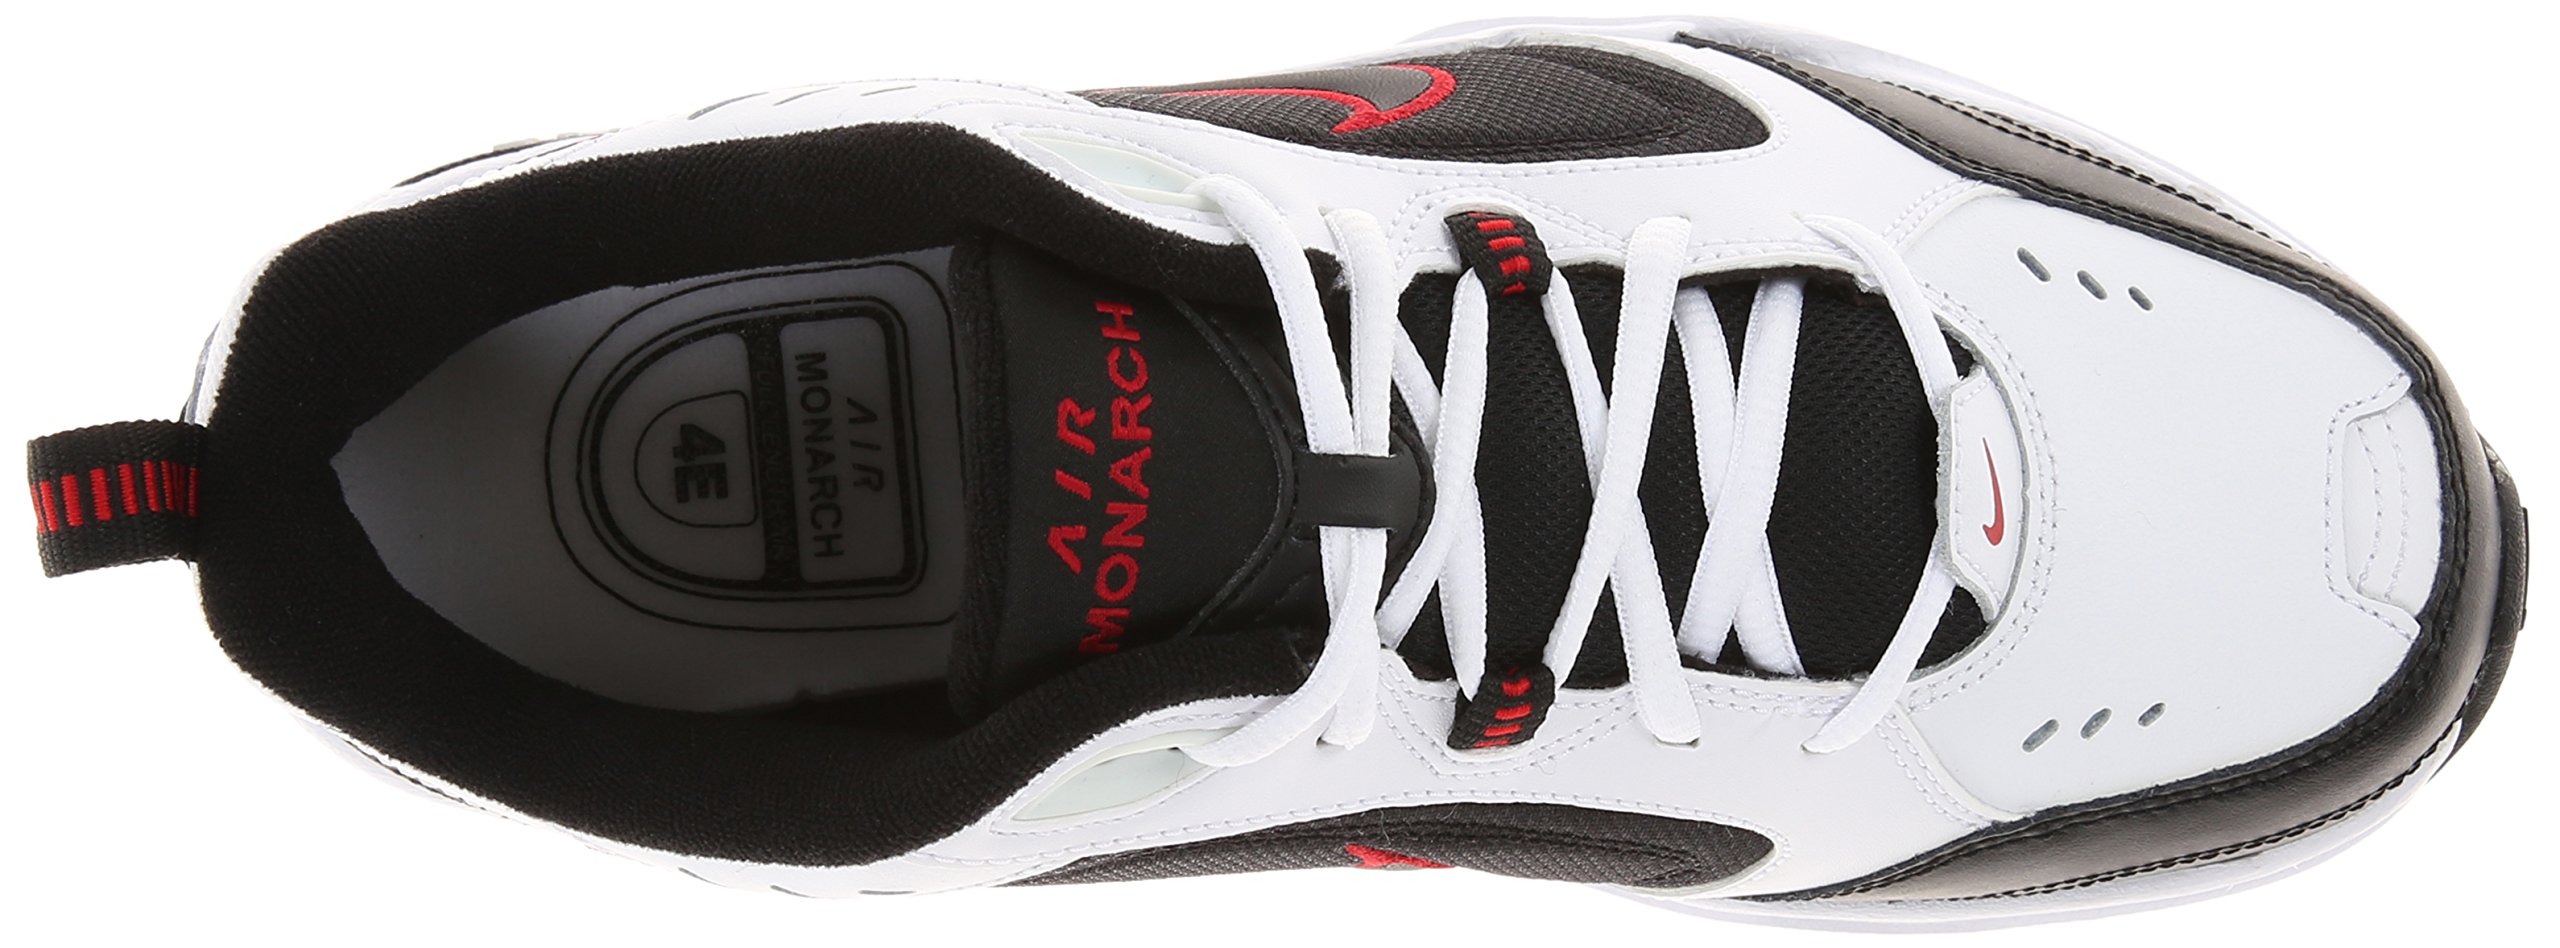 Nike Men's Air Monarch IV Training Shoe - image 5 of 8